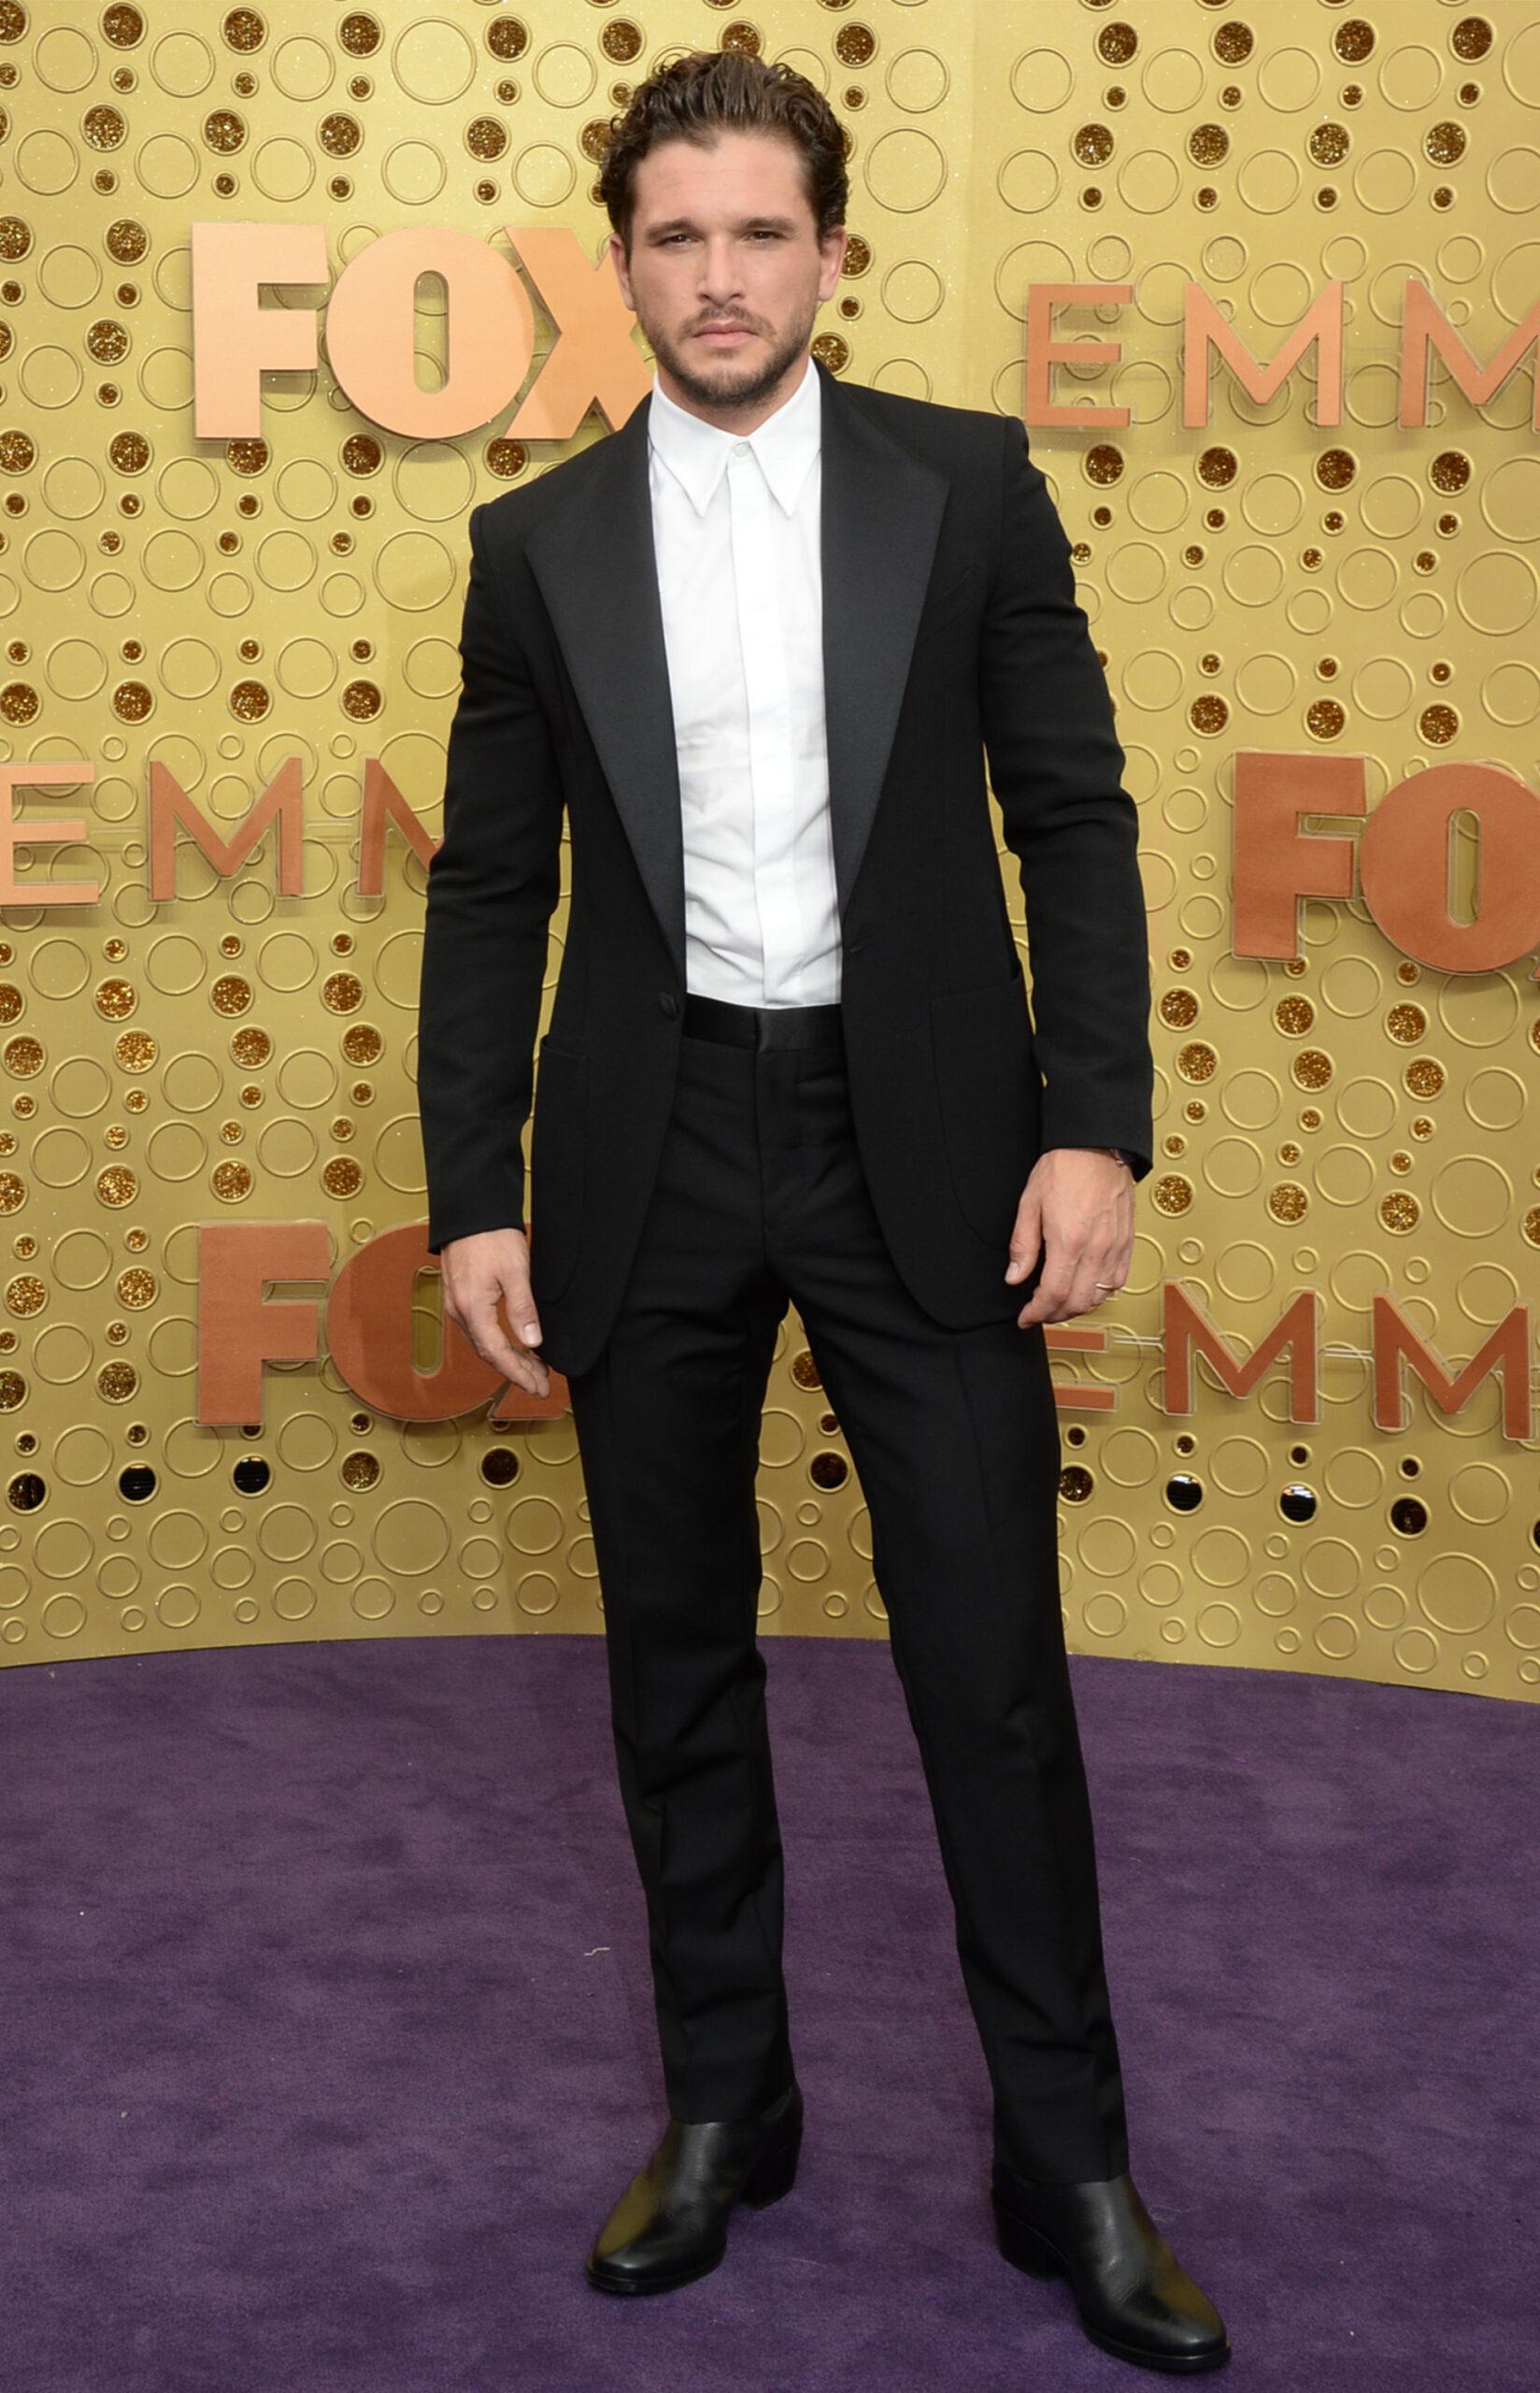 Kit Harrington at the 2019 71st Annual Emmy Awards - Best Fashion